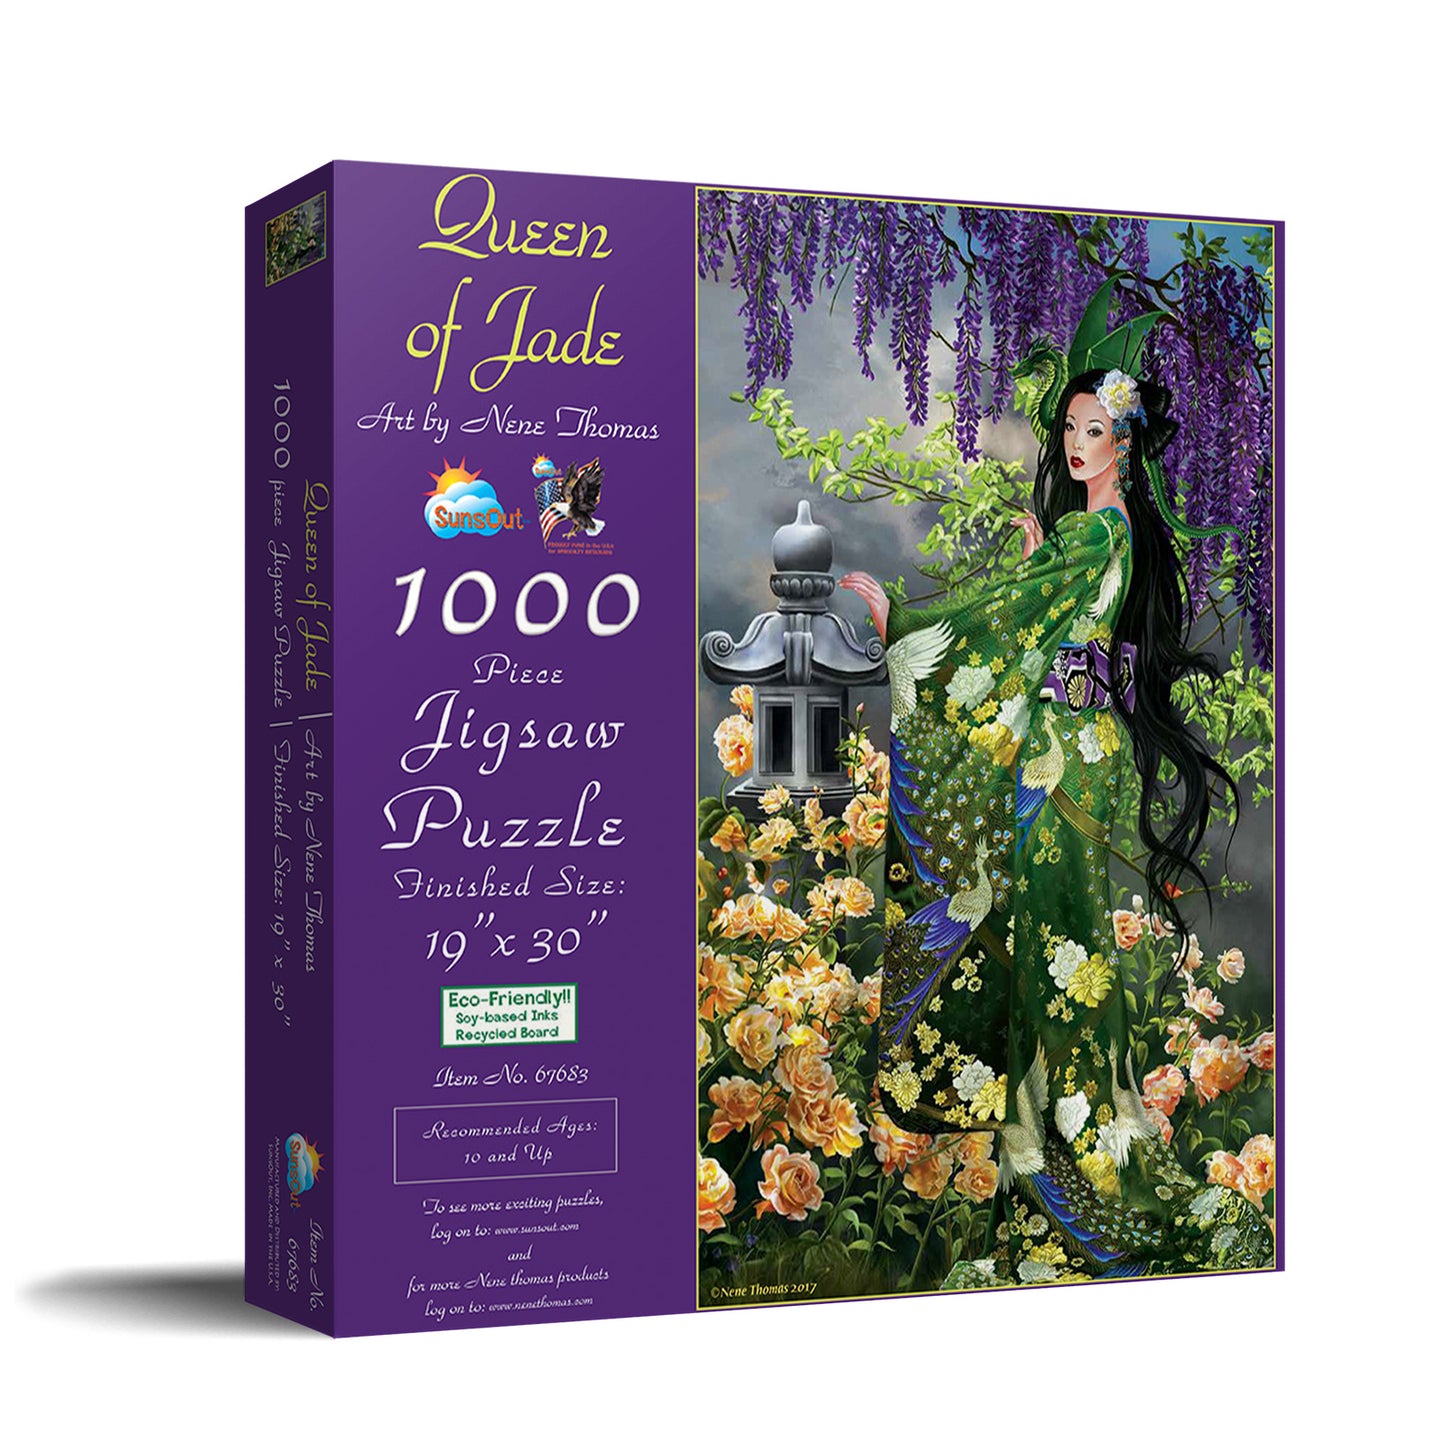 Queen of Jade - 1000 Piece Jigsaw Puzzle